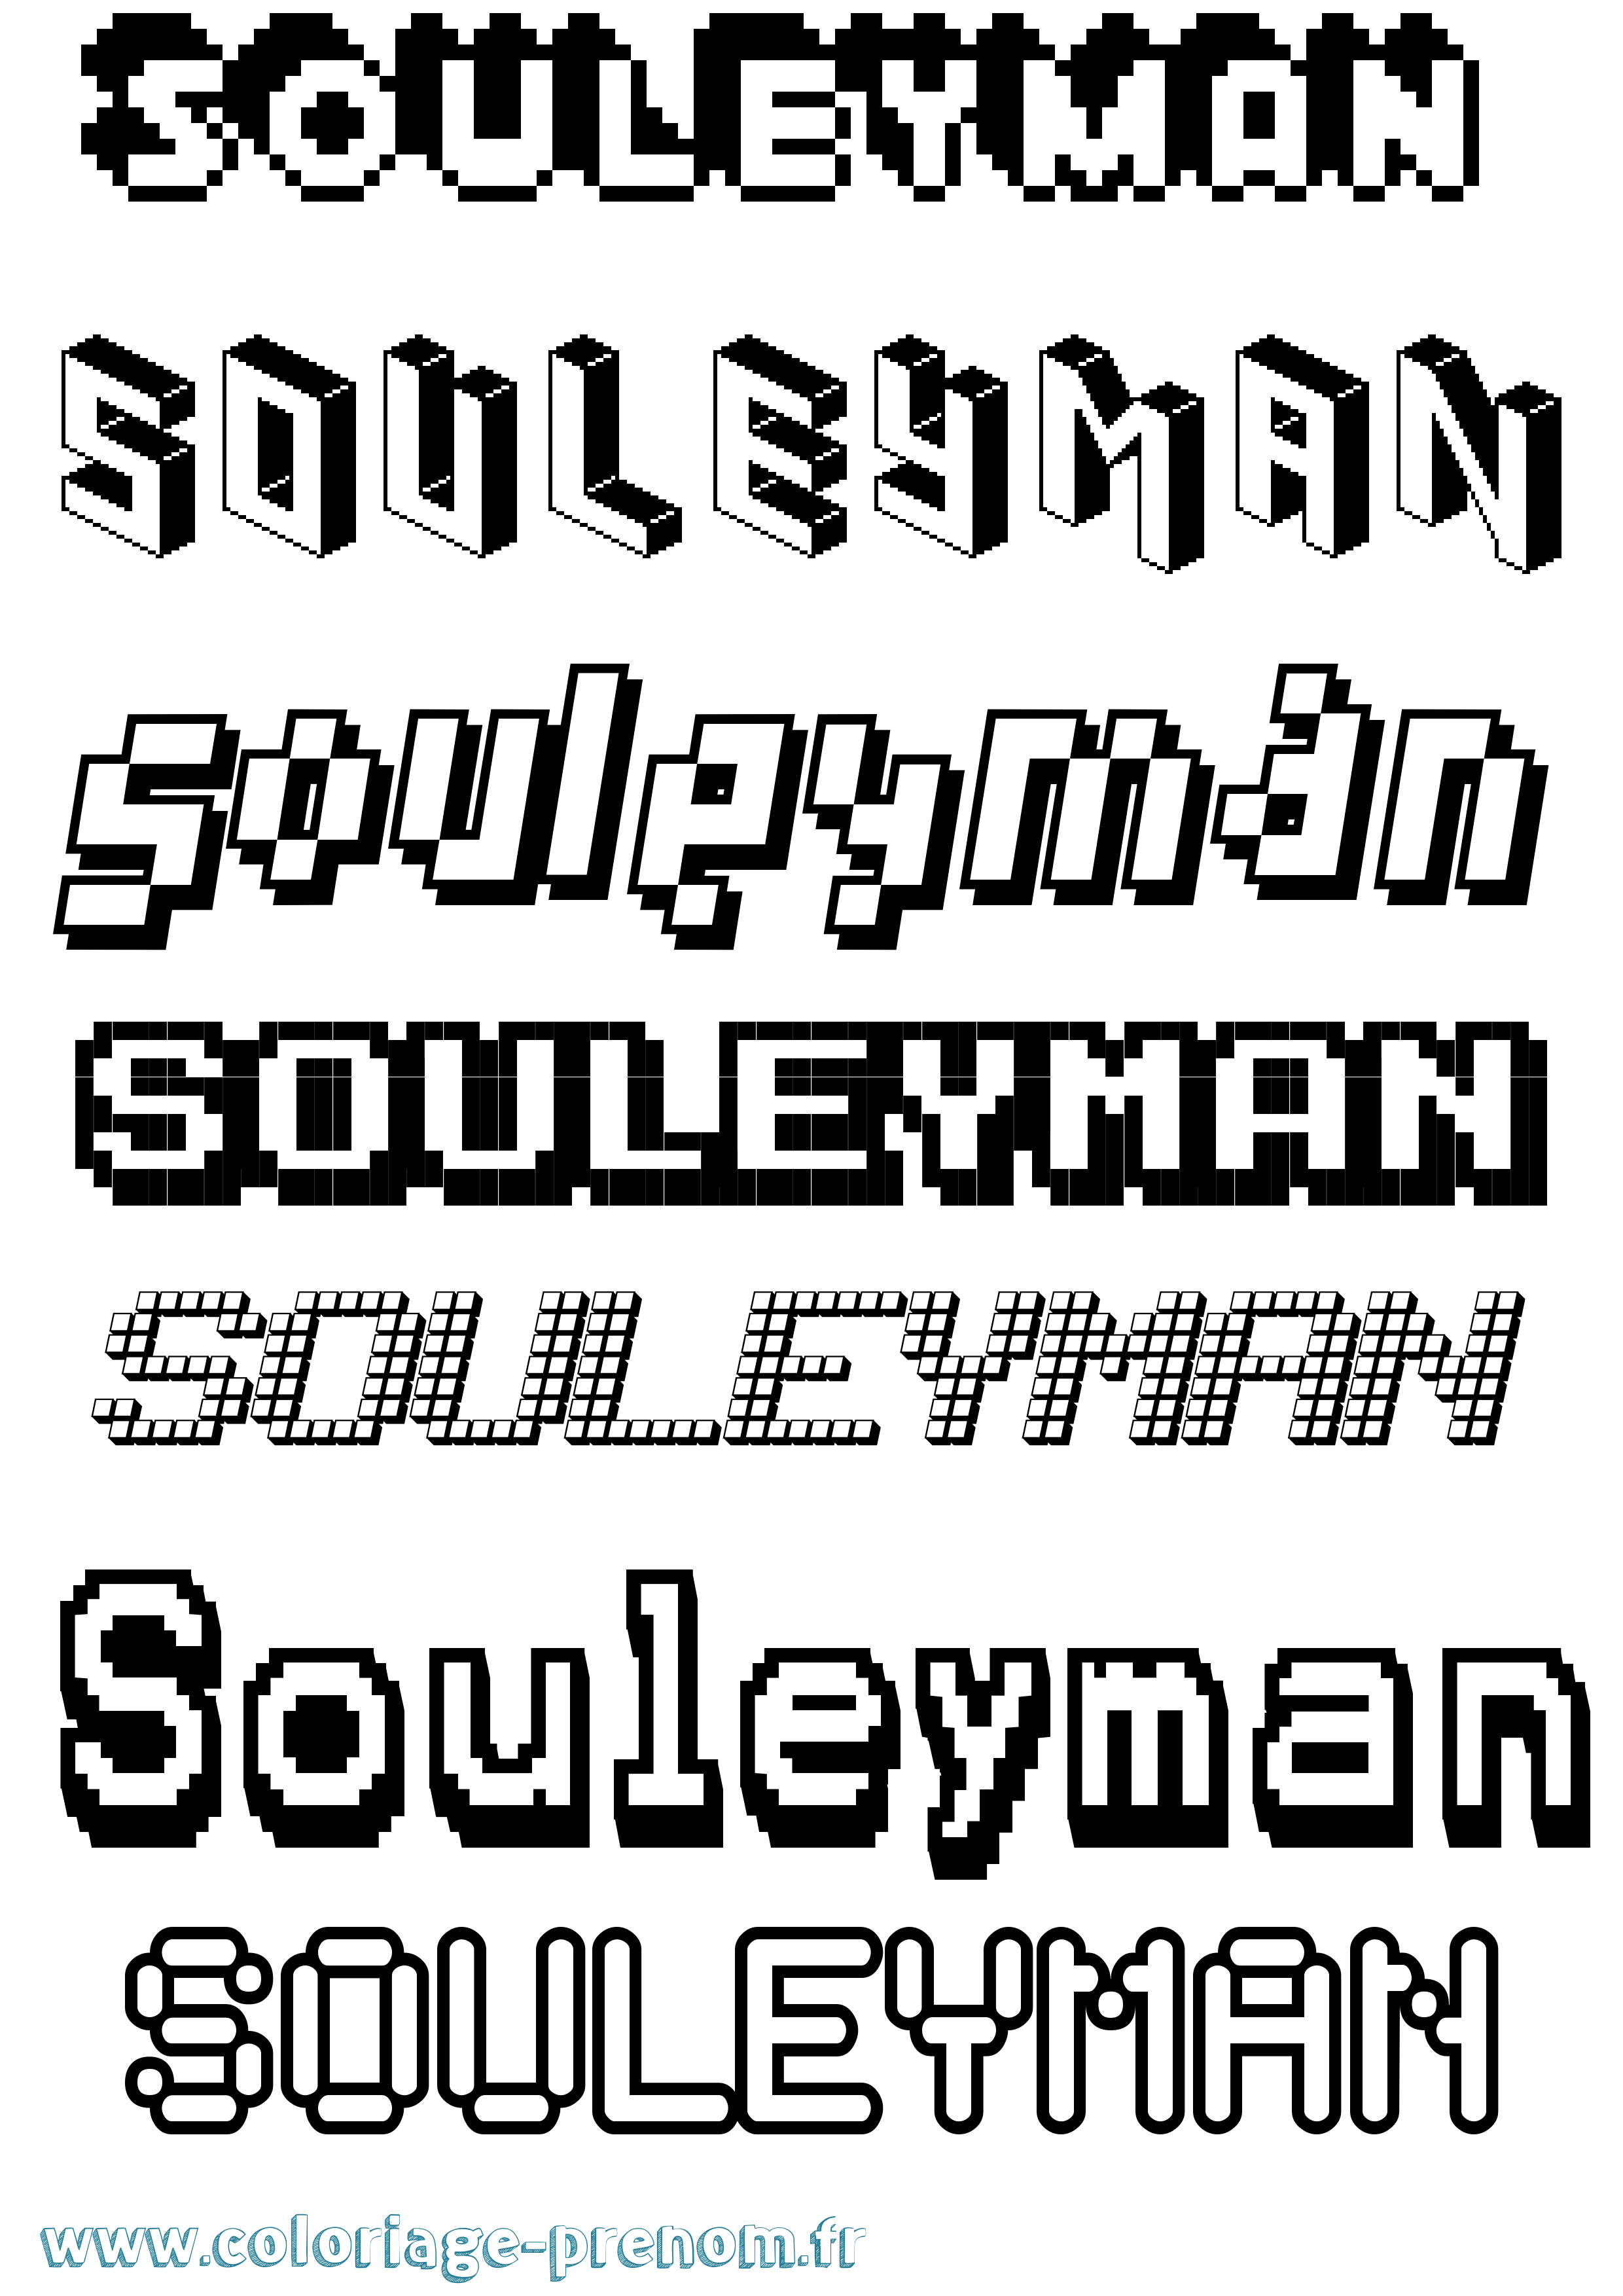 Coloriage prénom Souleyman Pixel